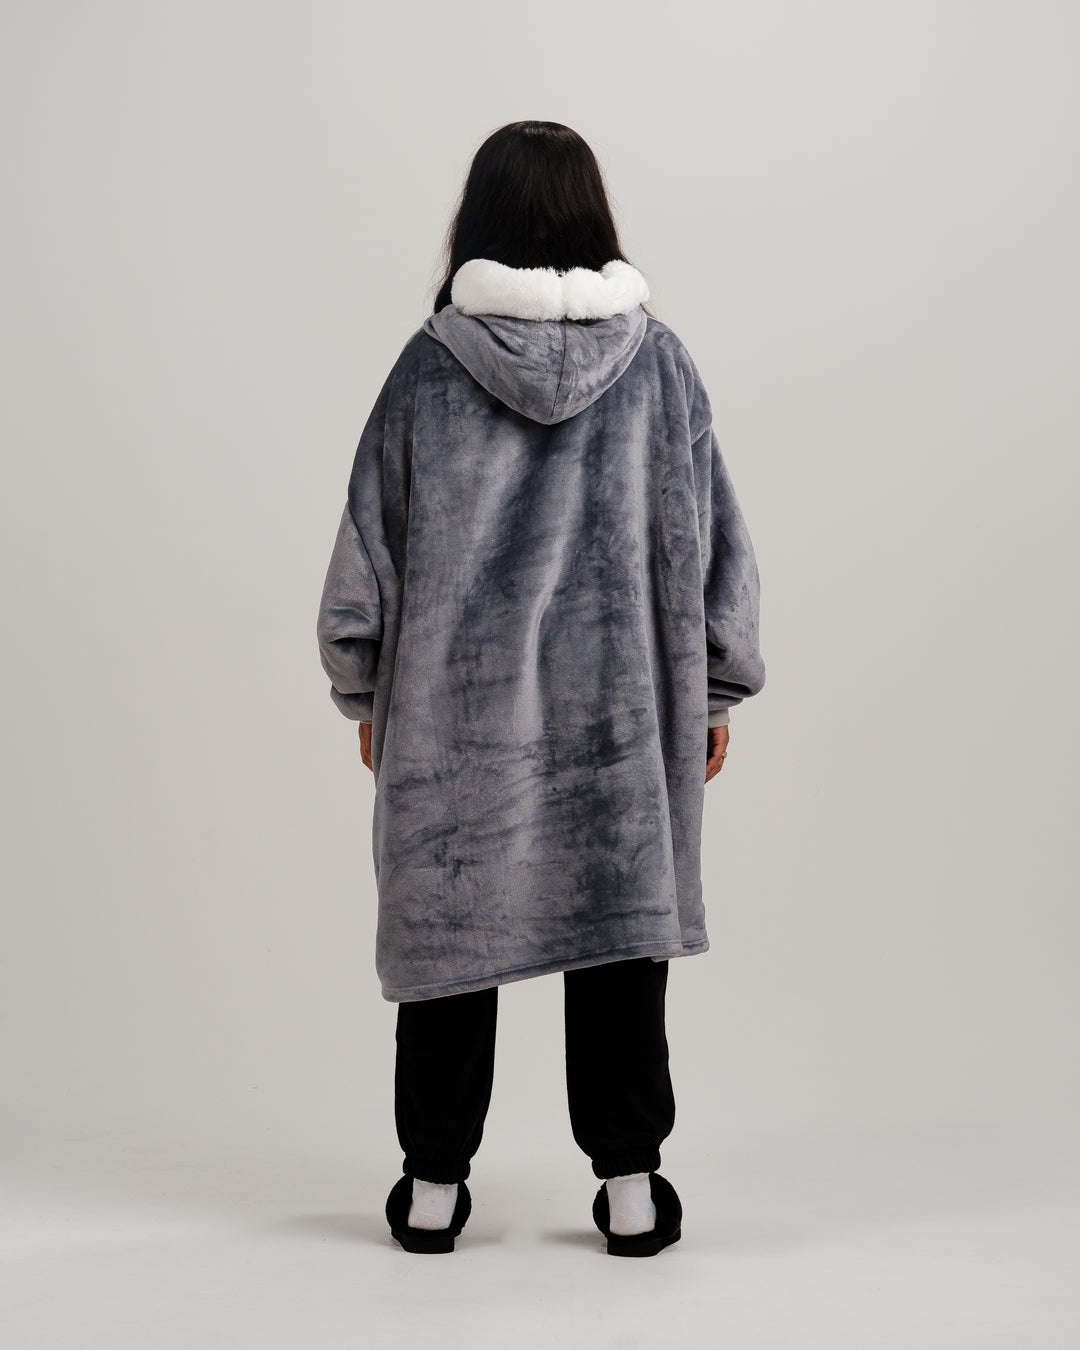 ONY Furlined Hoodie Blanket - Grey - It's Ony